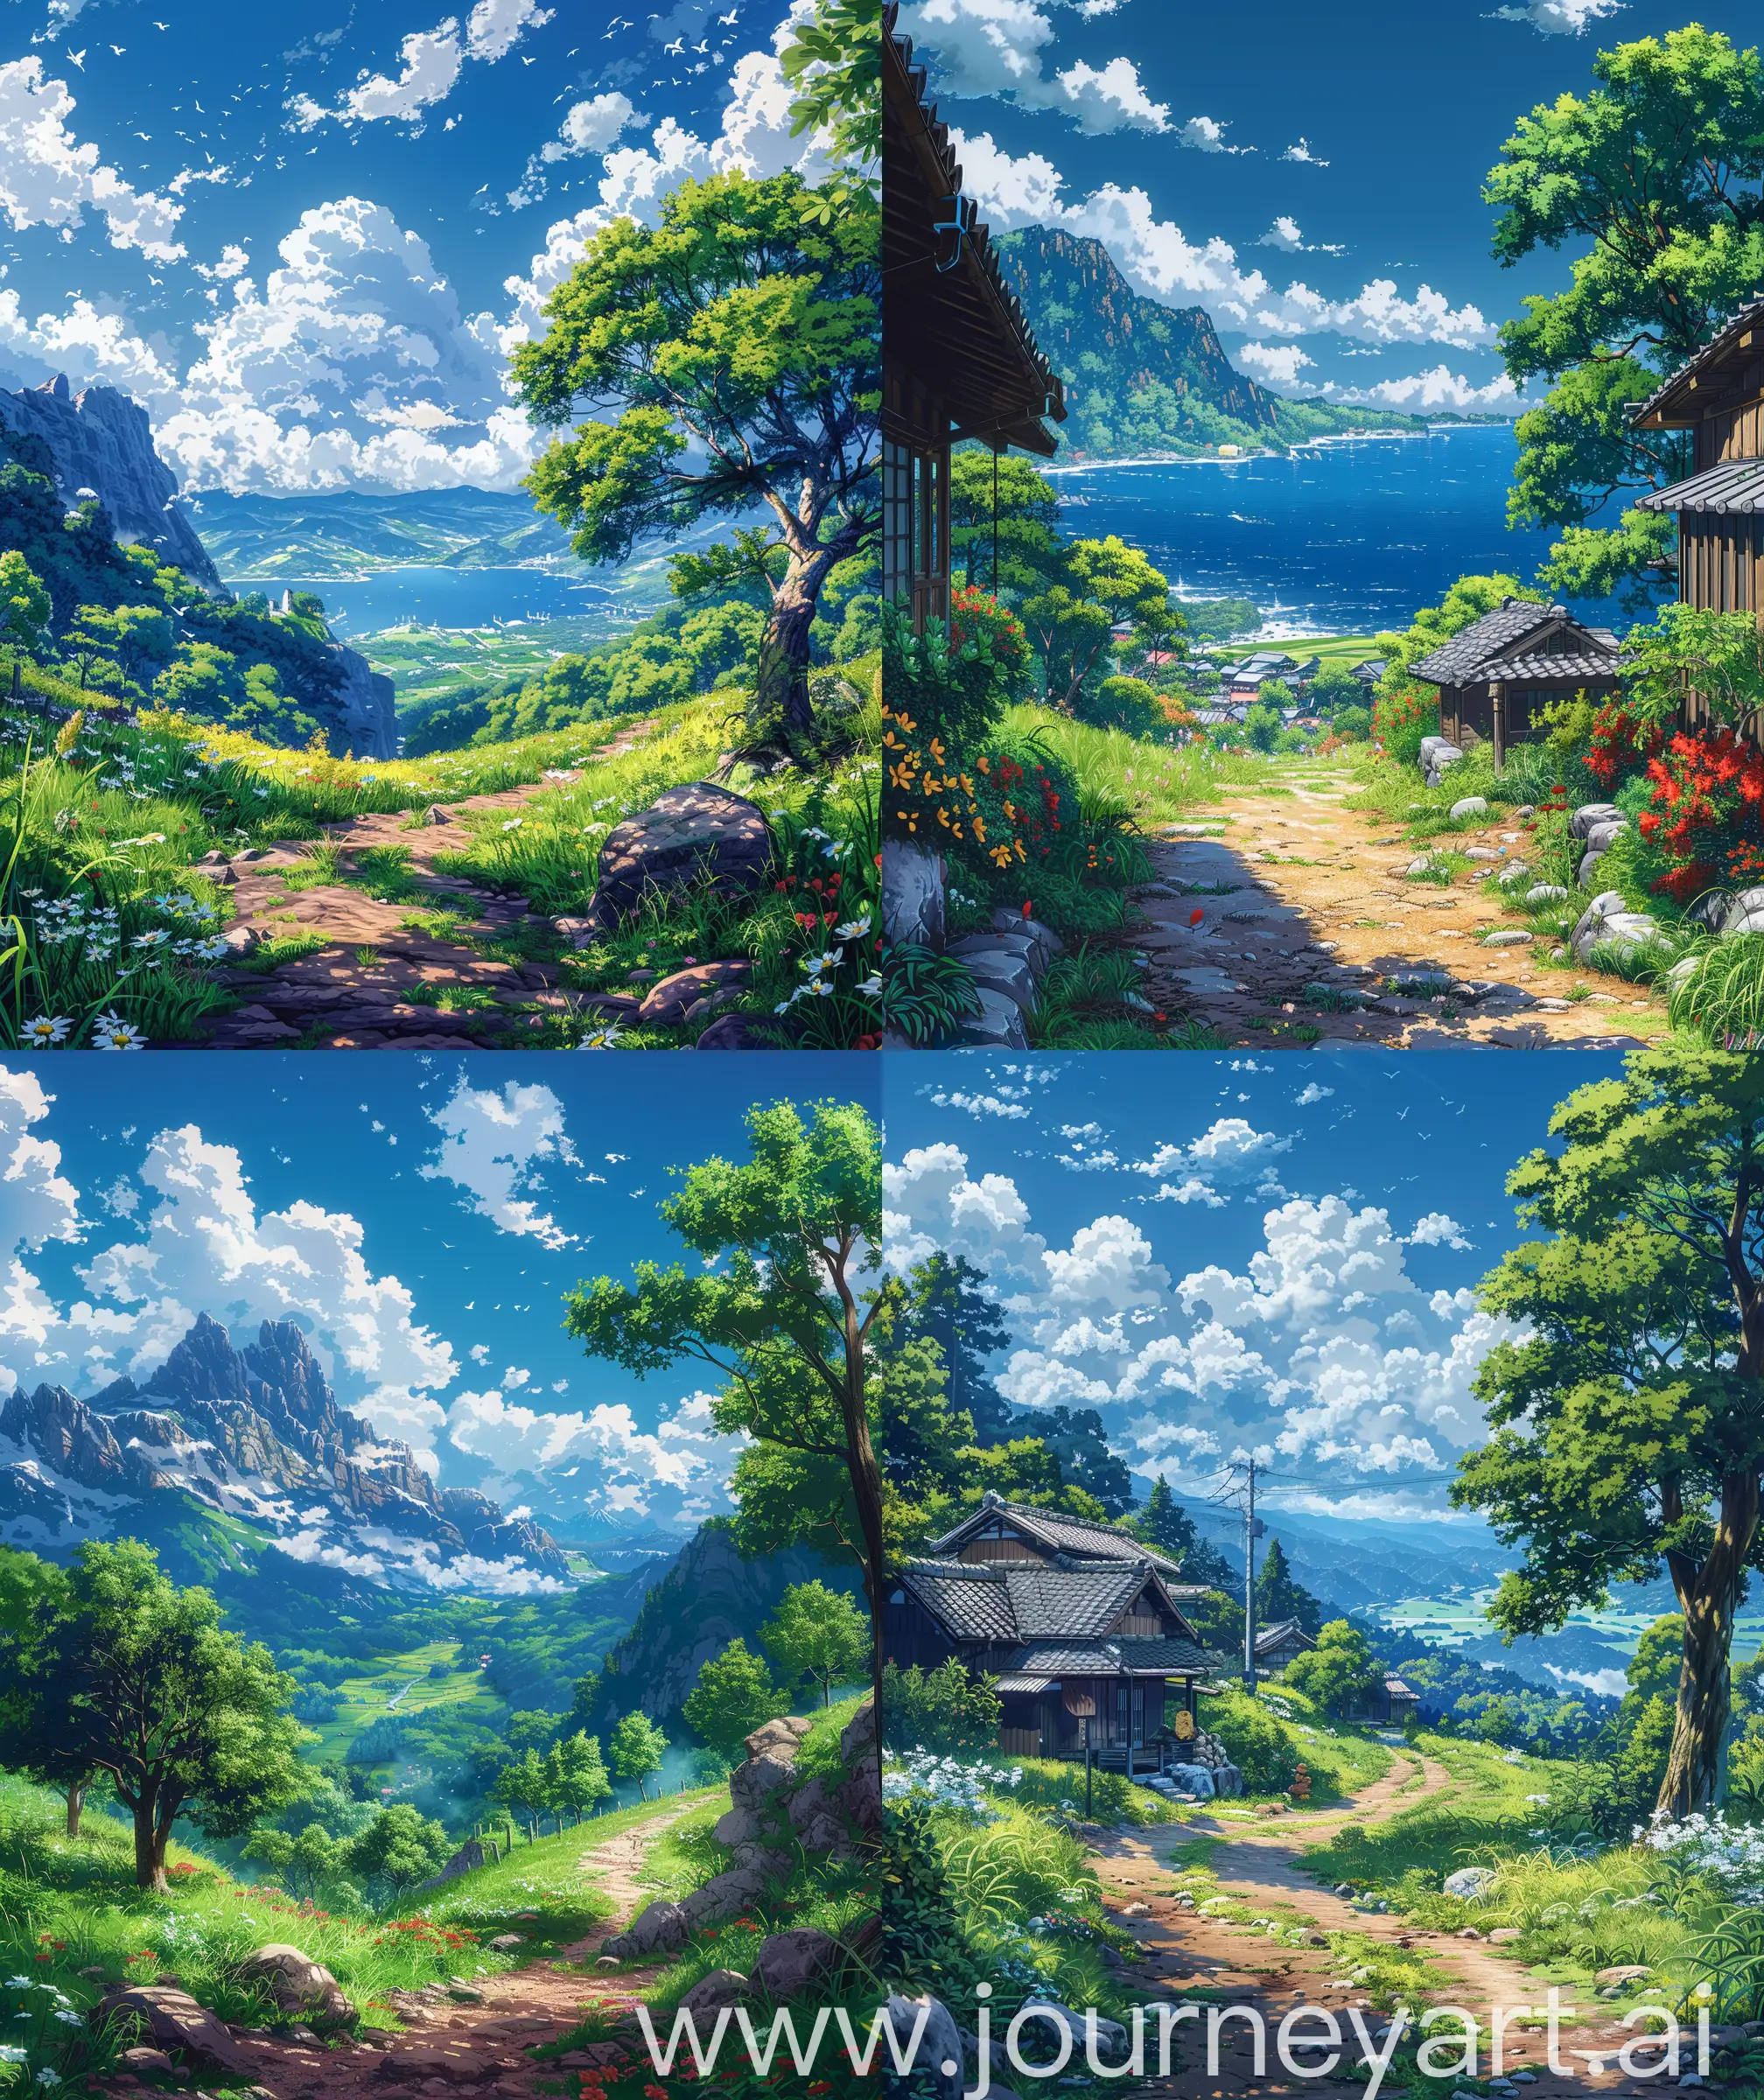 Tranquil-Anime-Scenery-Serene-Nature-Landscapes-in-Makoto-Shinkai-Style